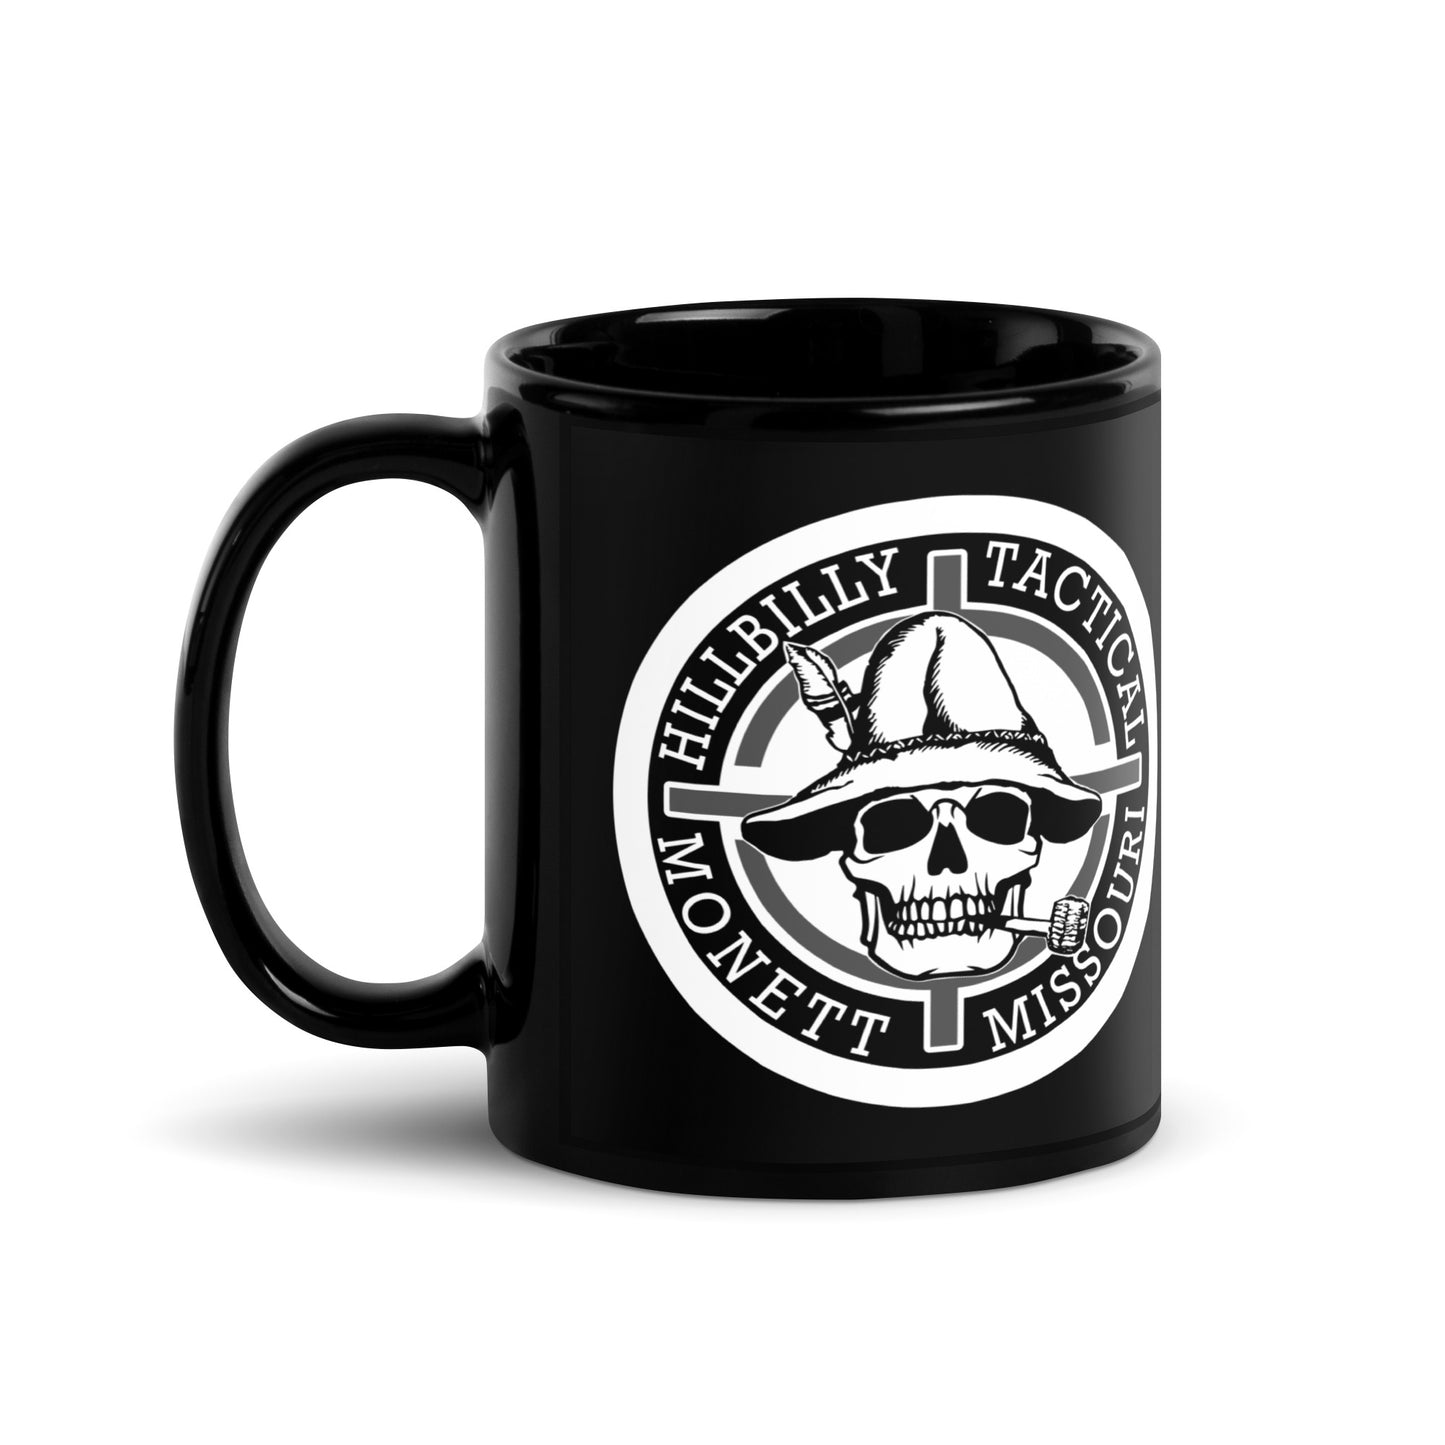 Black & White Hillbilly Tactical Logo Black Glossy Mug